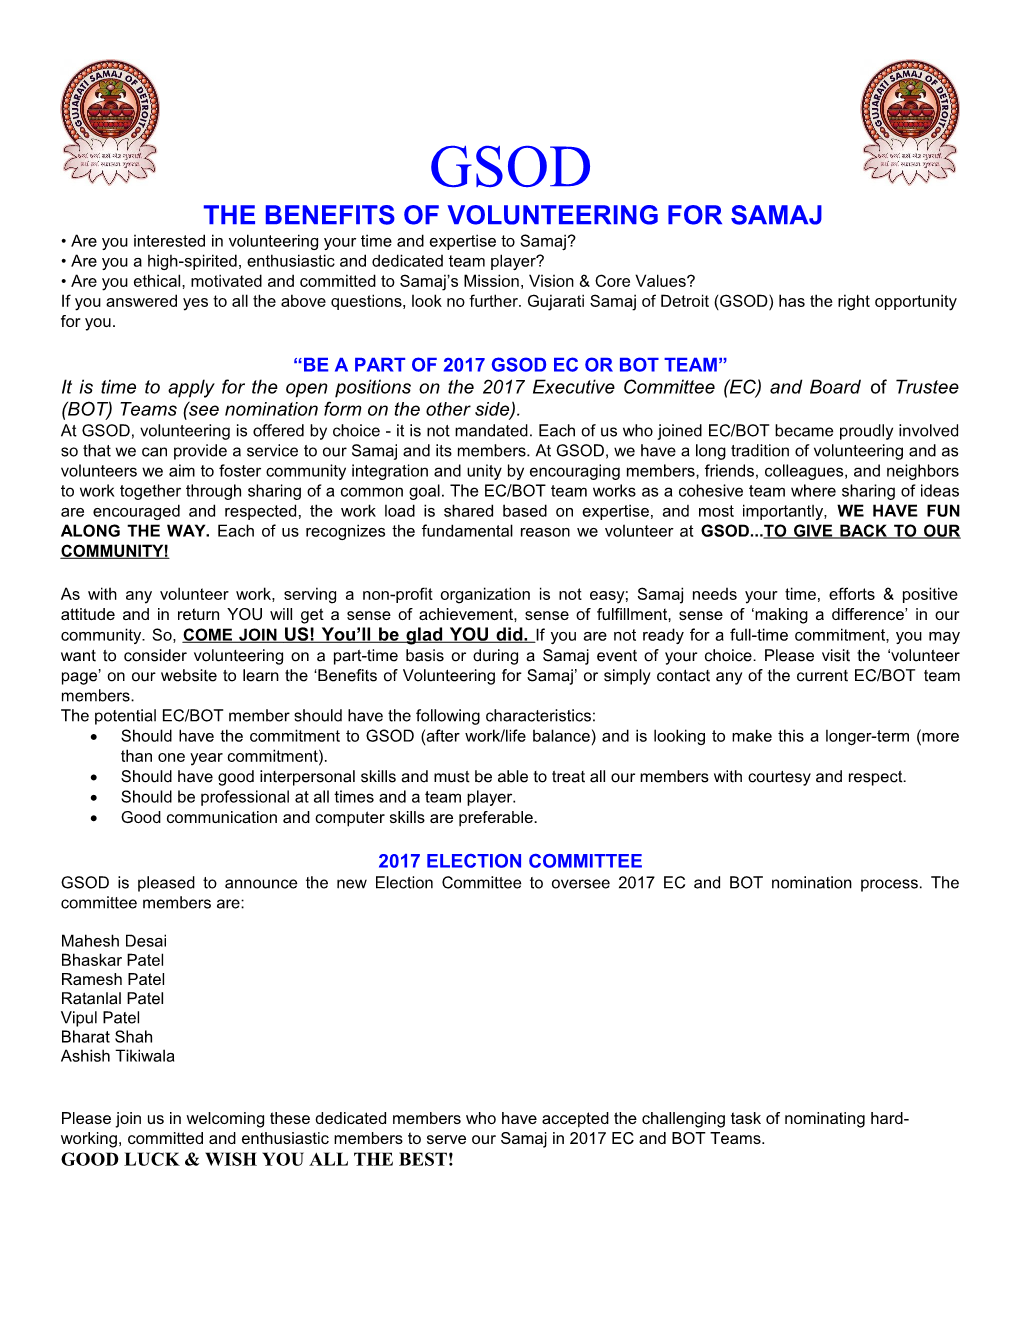 The Benefits of Volunteering for Samaj